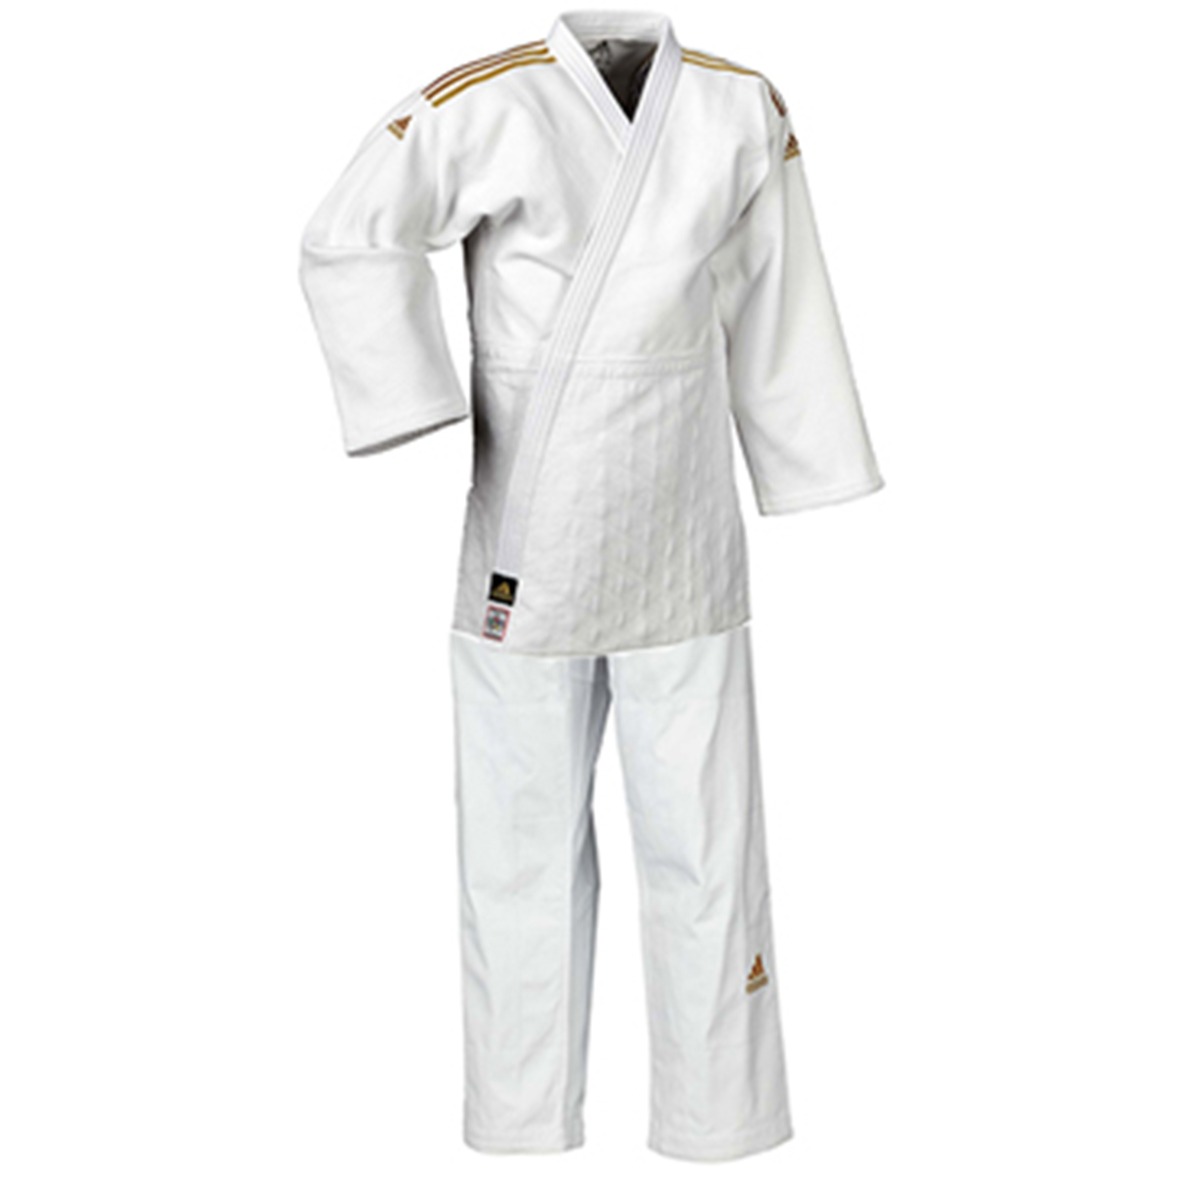 Adidas J500 Judo Uniform  Adidas Judo Suit  Fight Equipment UK